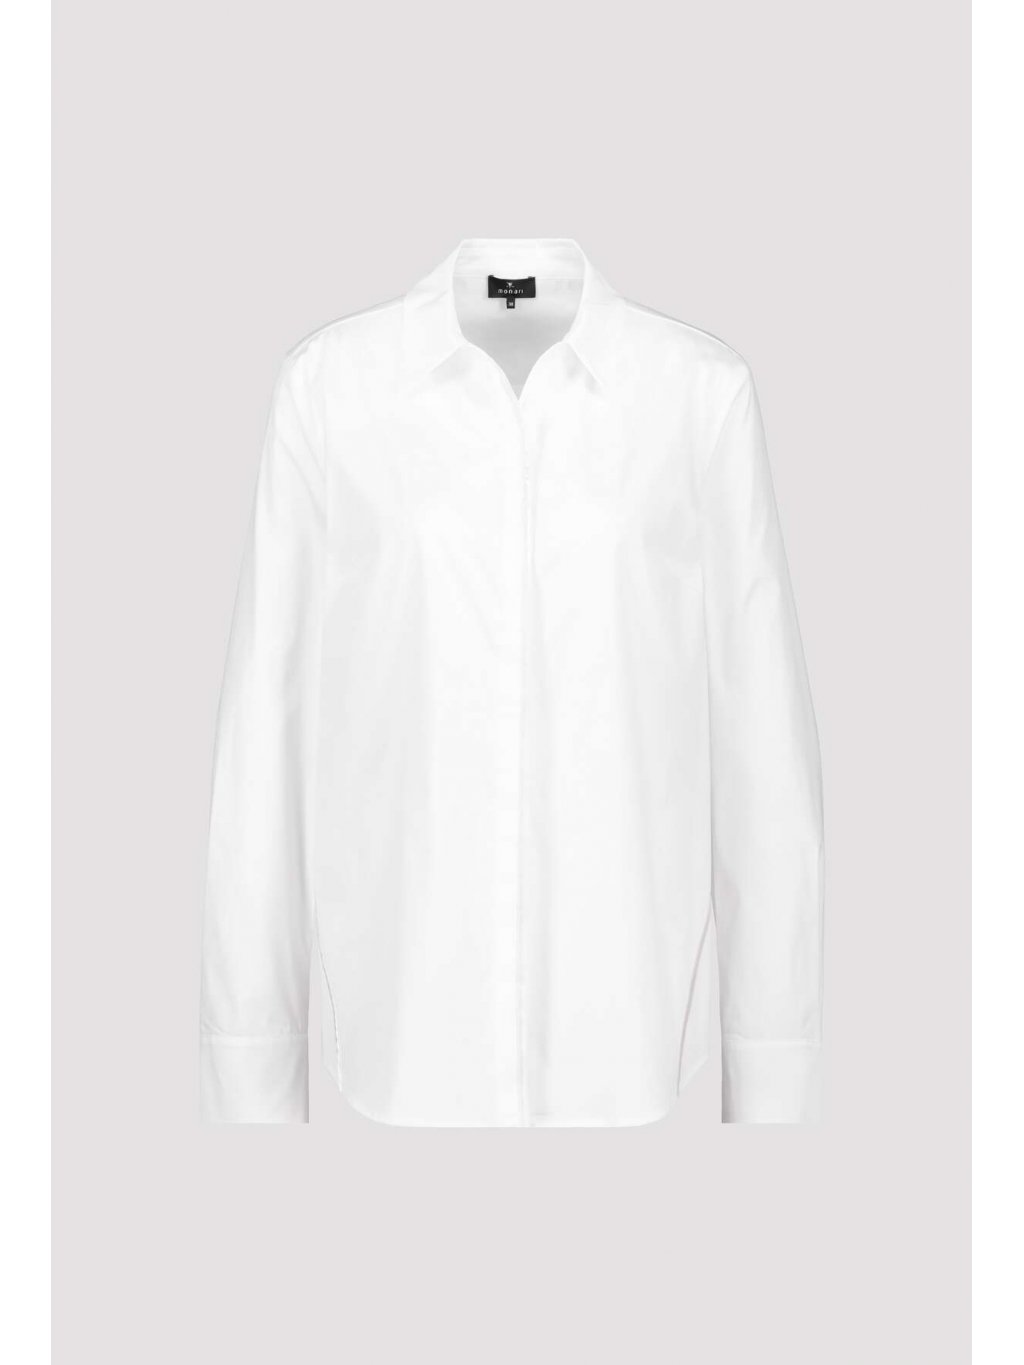 Košile Monari 7417 bílá se saténovou stuhou